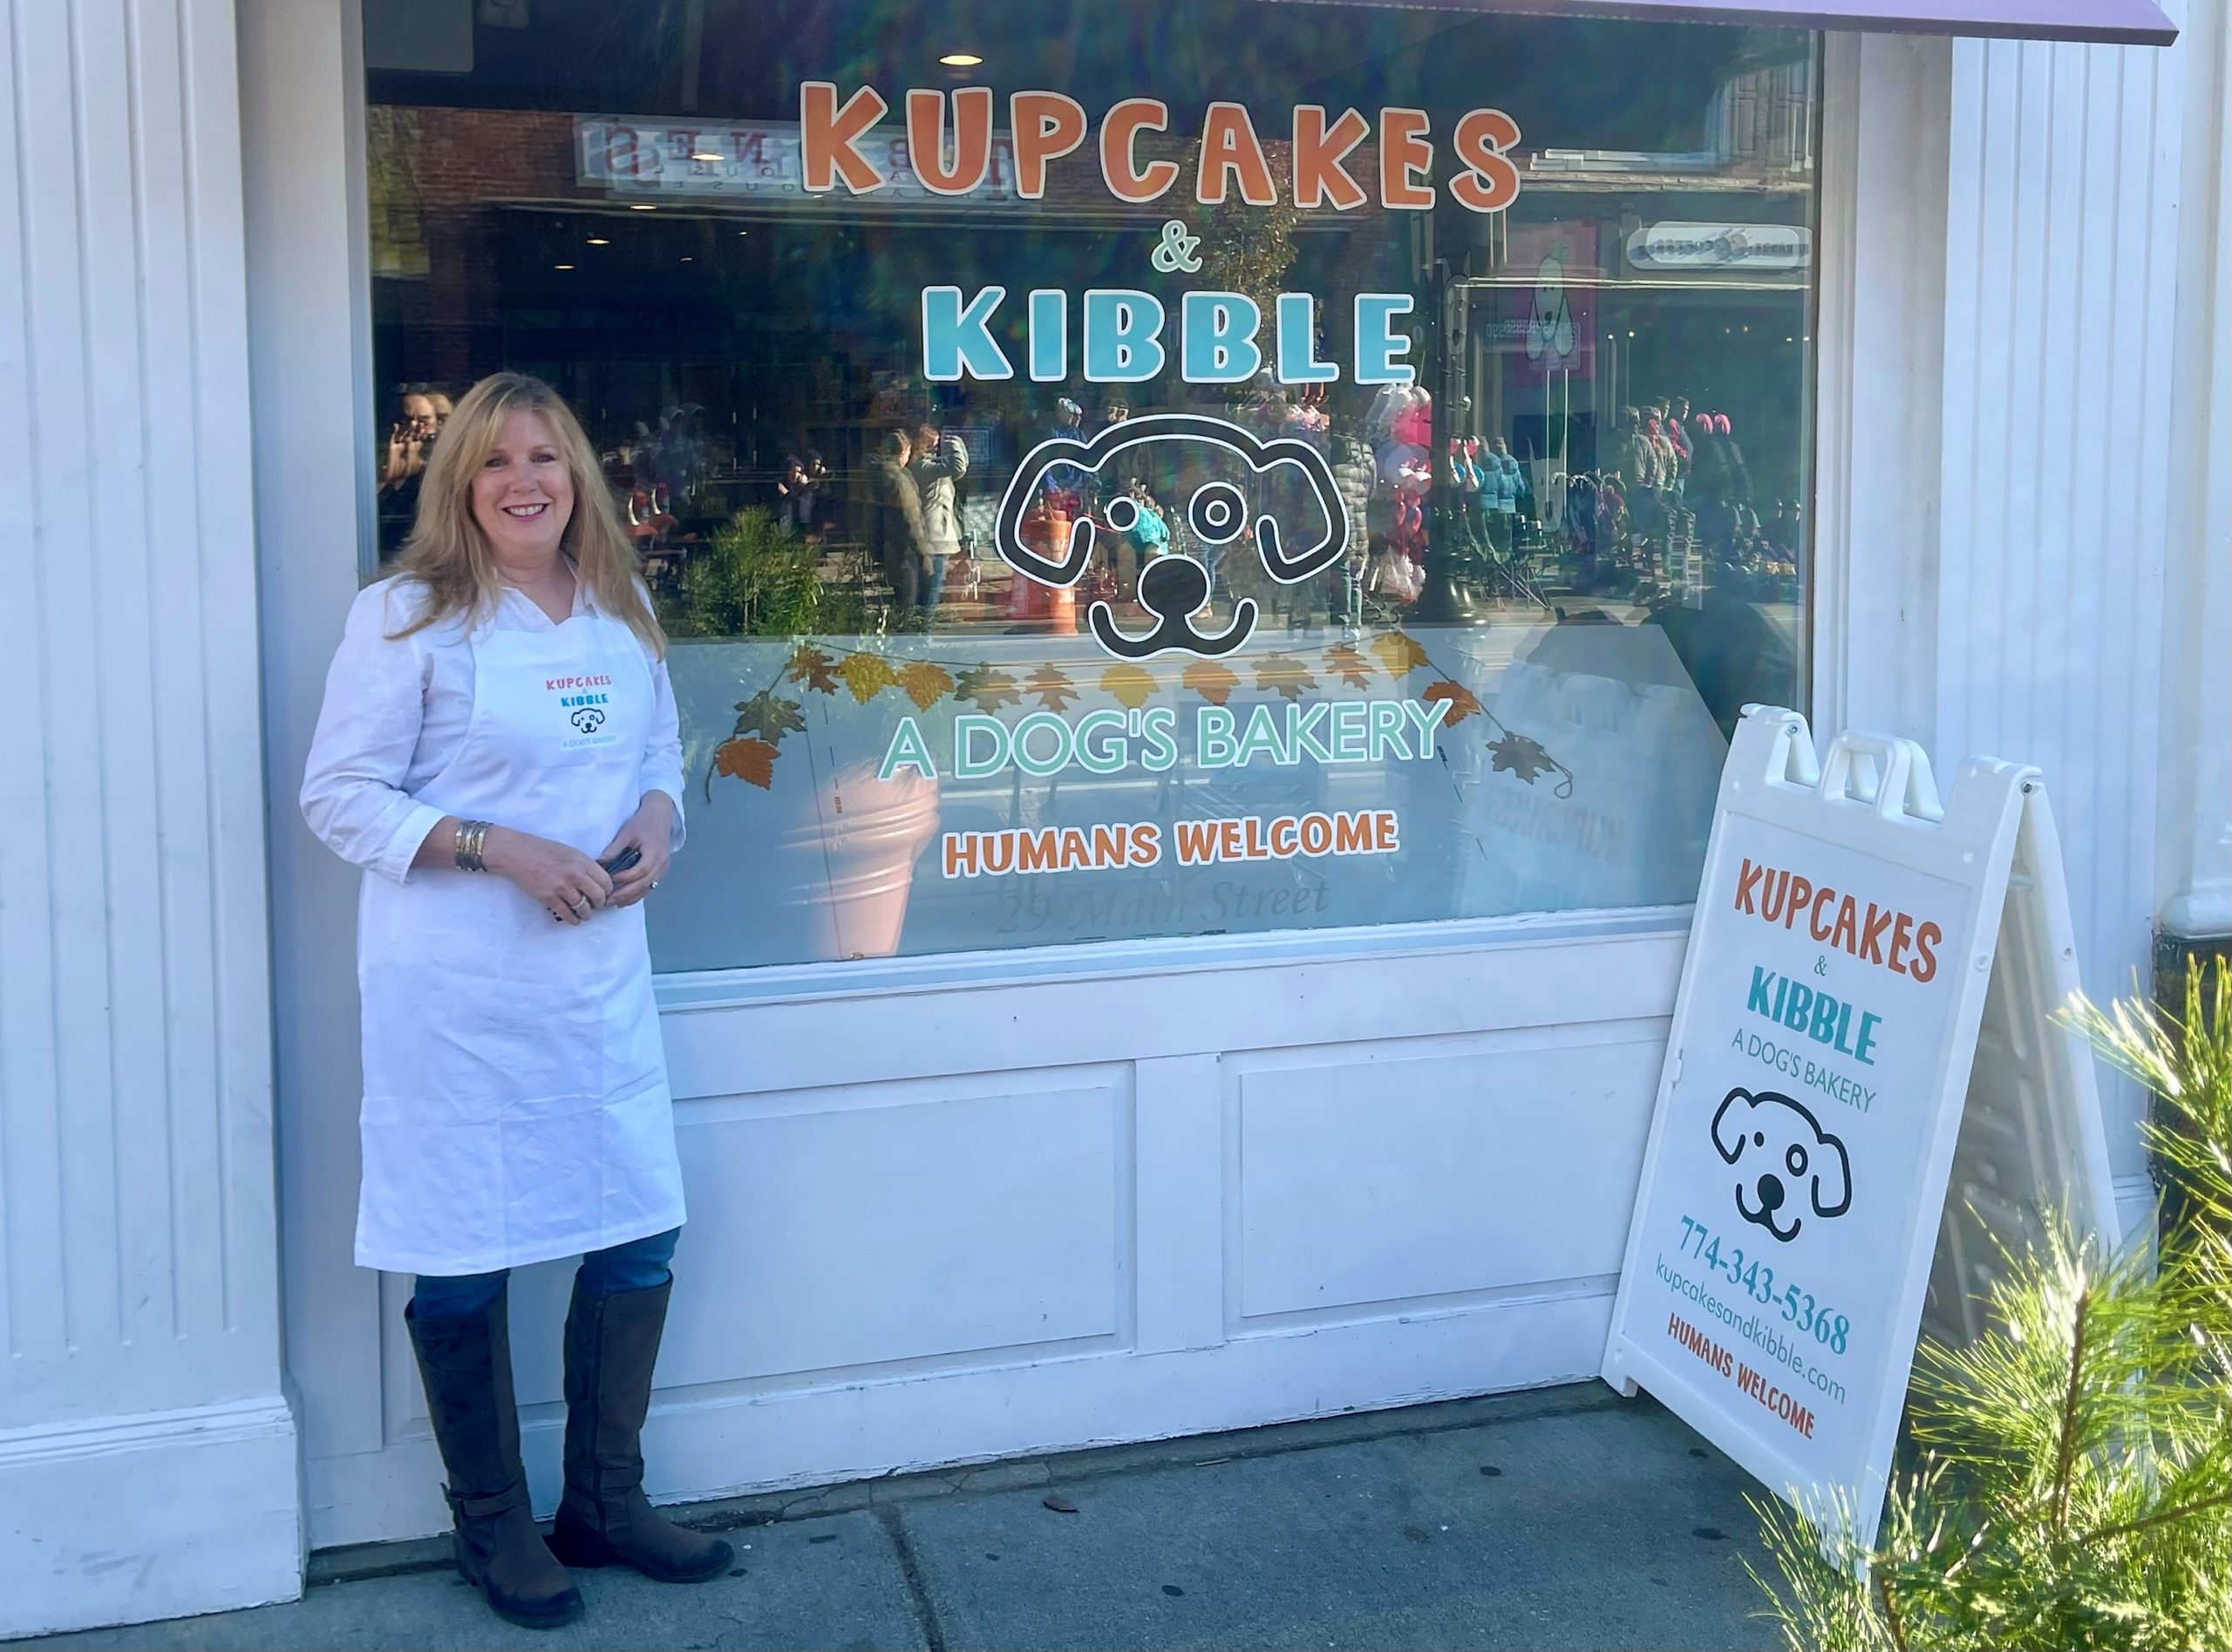 Kupcakes Kibble owner scaled